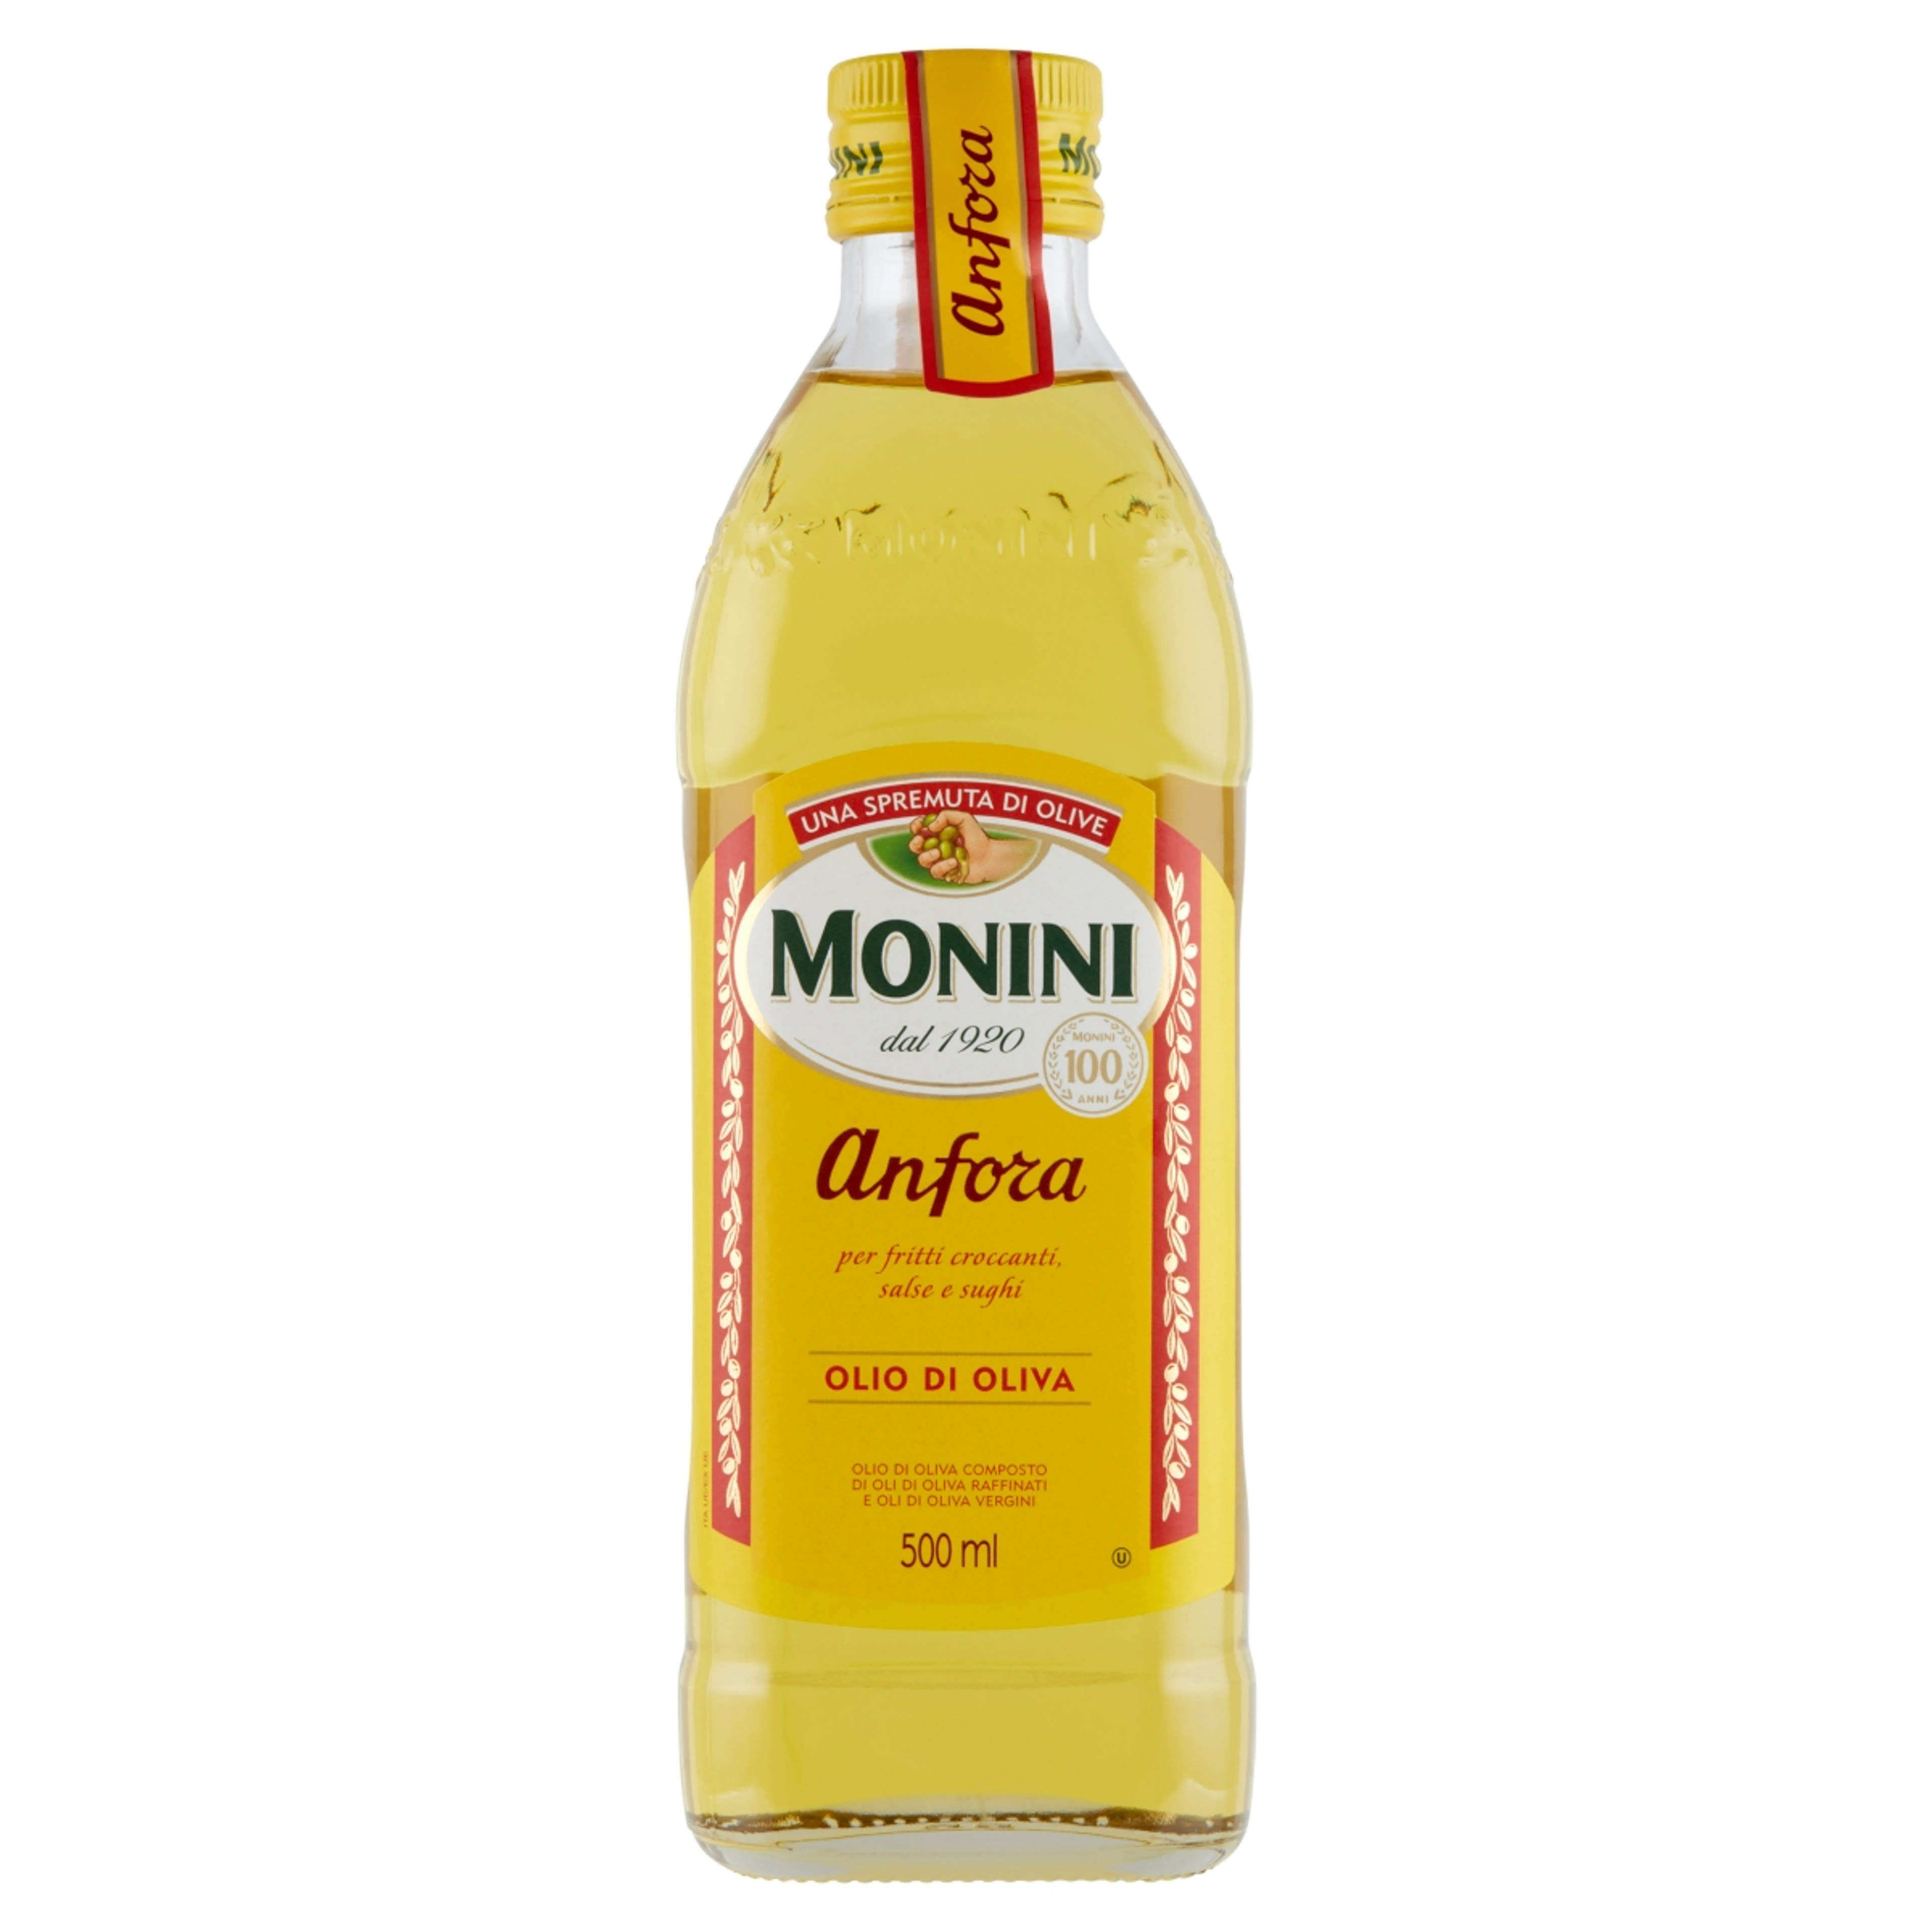 Monini Anfora olivaolaj - 500 ml-1